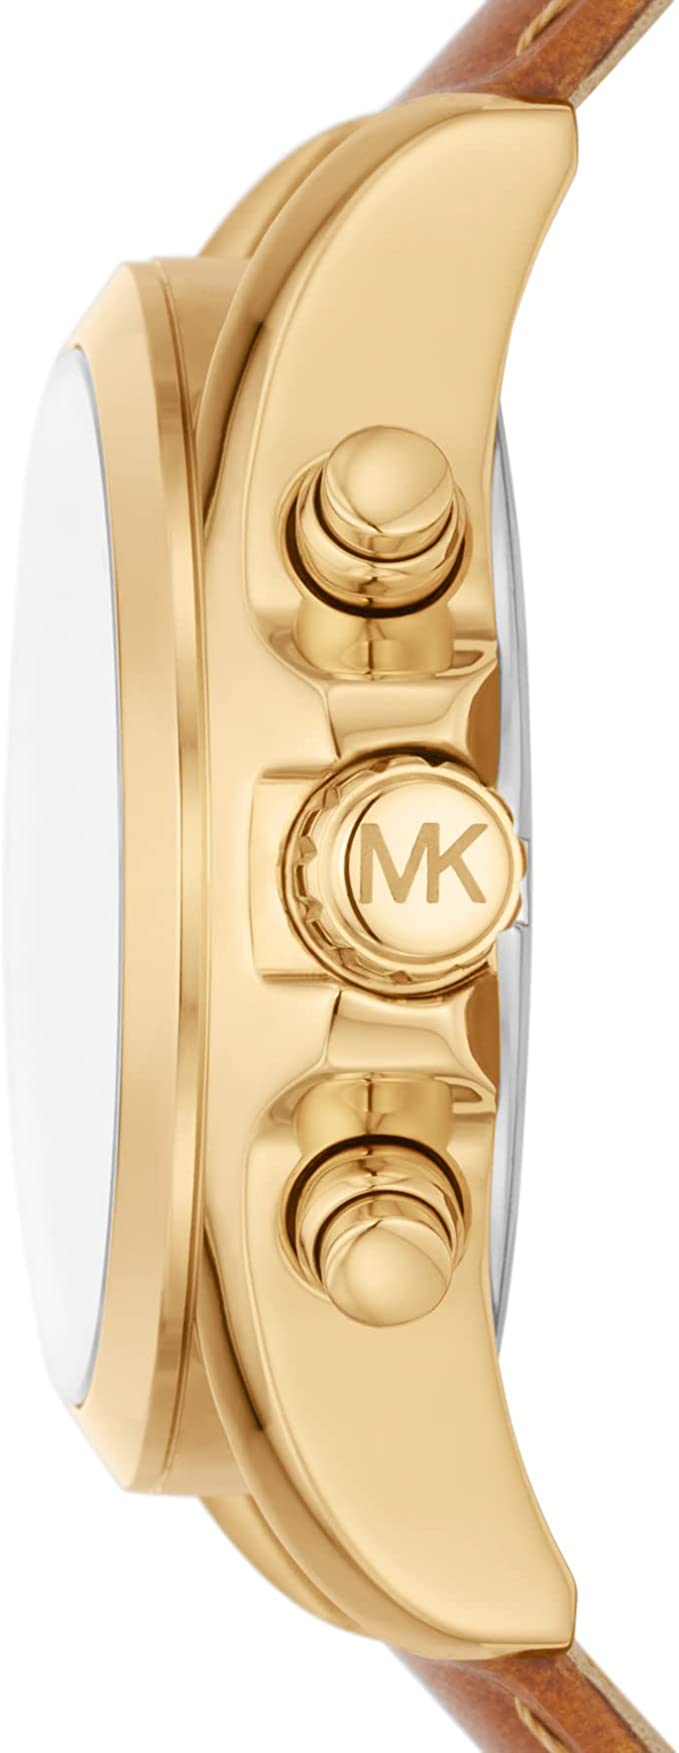 Zegarek damski Michael Kors MK2961